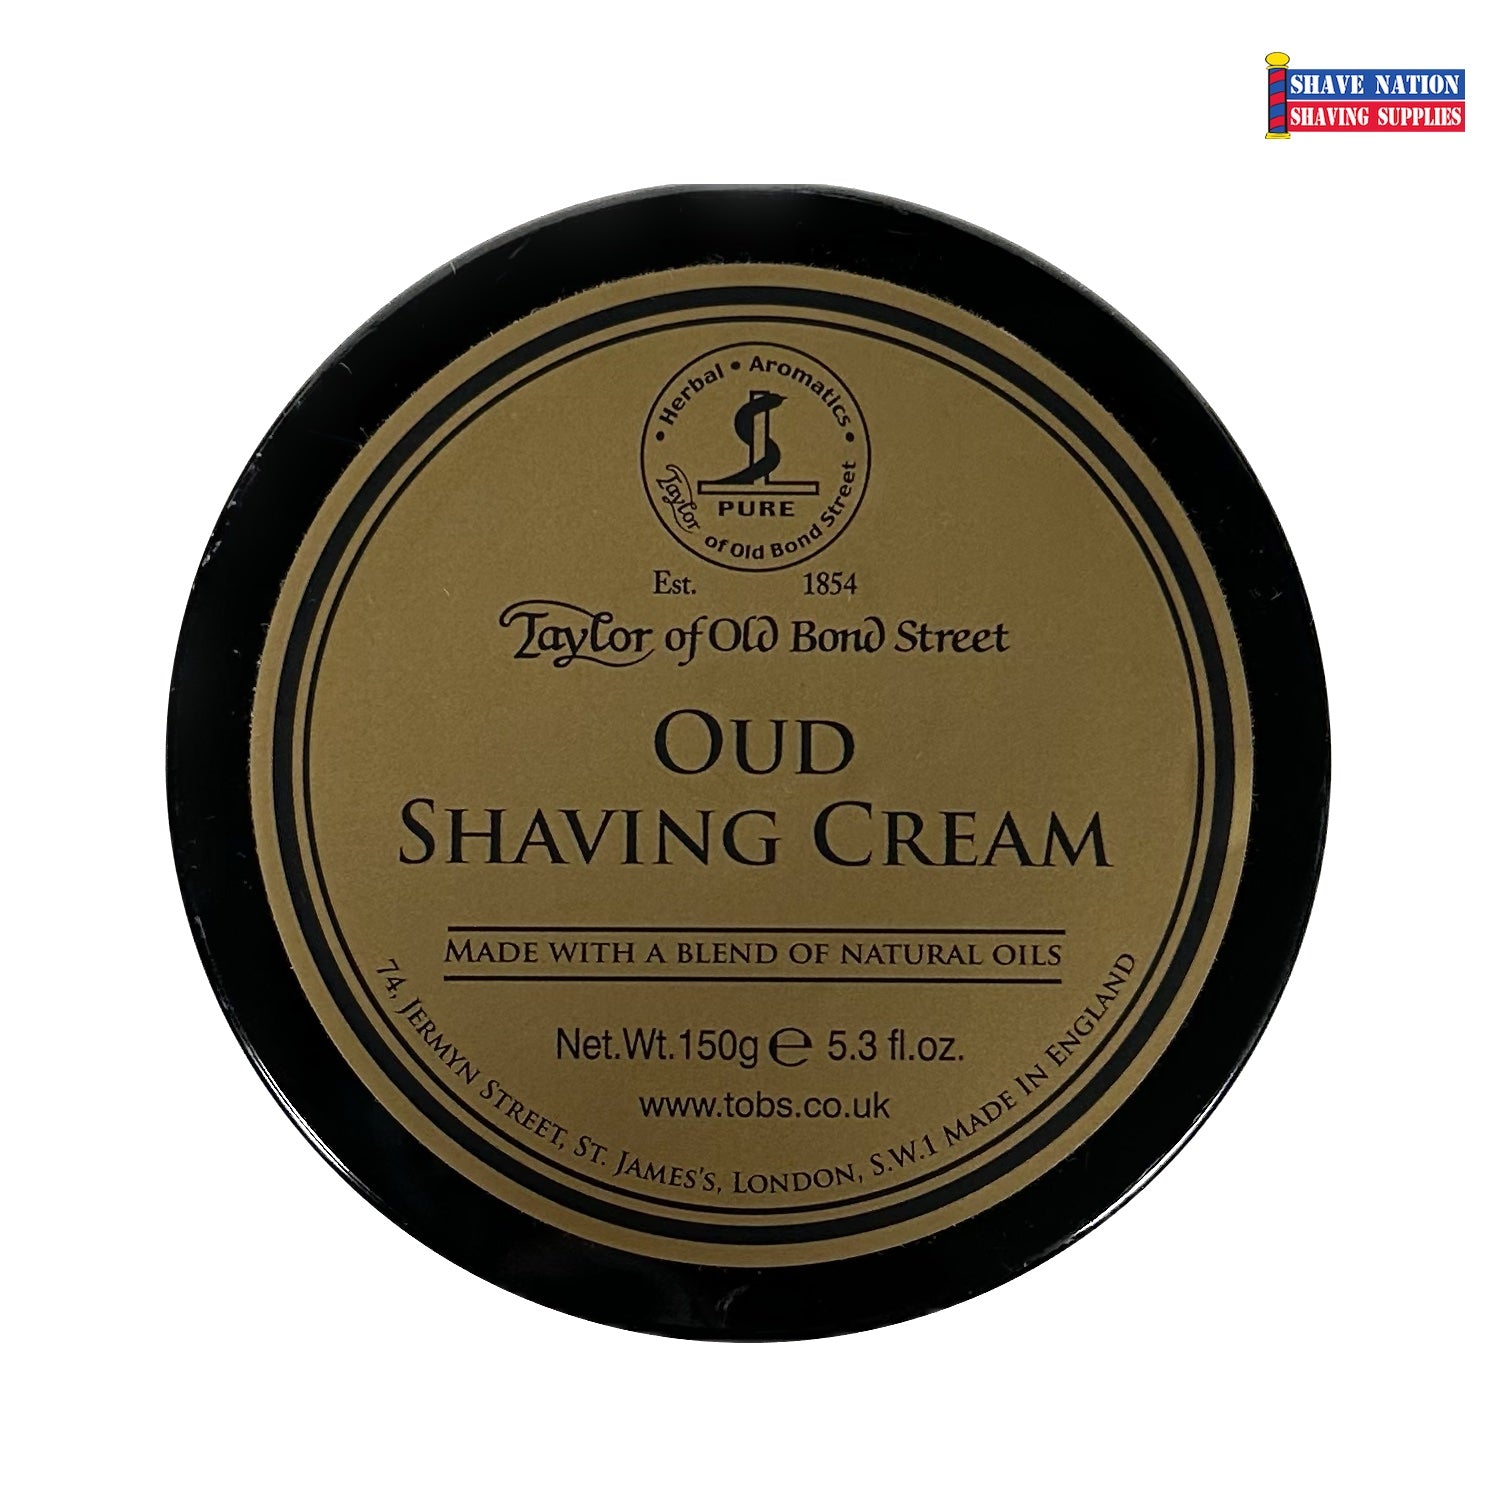 NEW! Taylor Nation Shaving | Supplies® Shaving Cream Street Shave Old Bond Jar OUD of